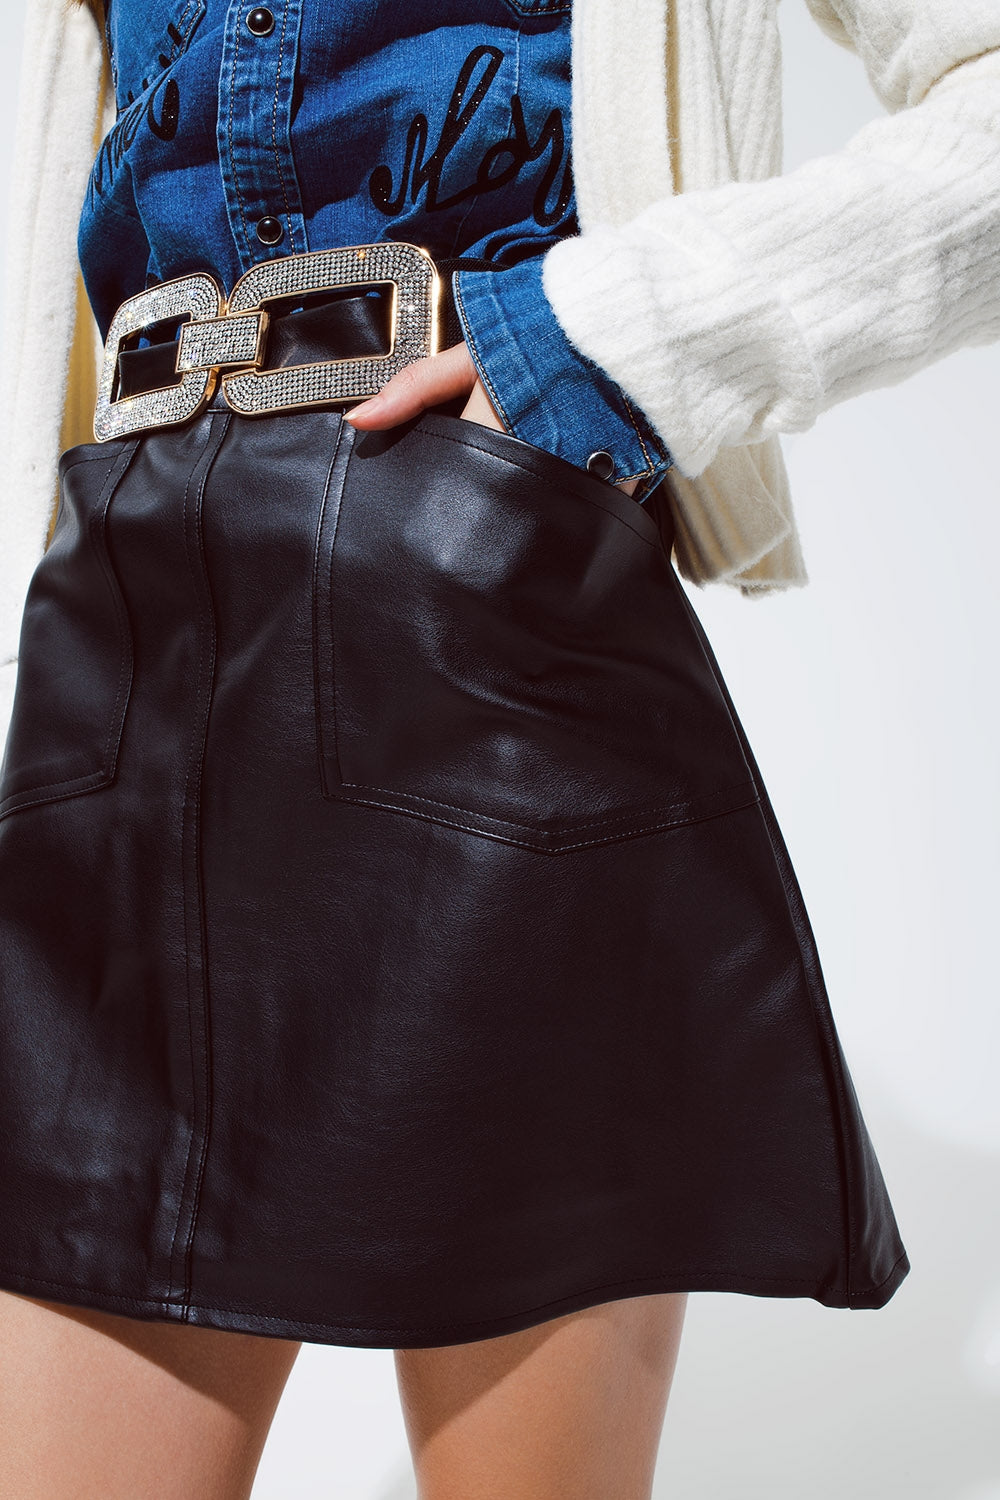 Black Leatherette mini skirt with pockets